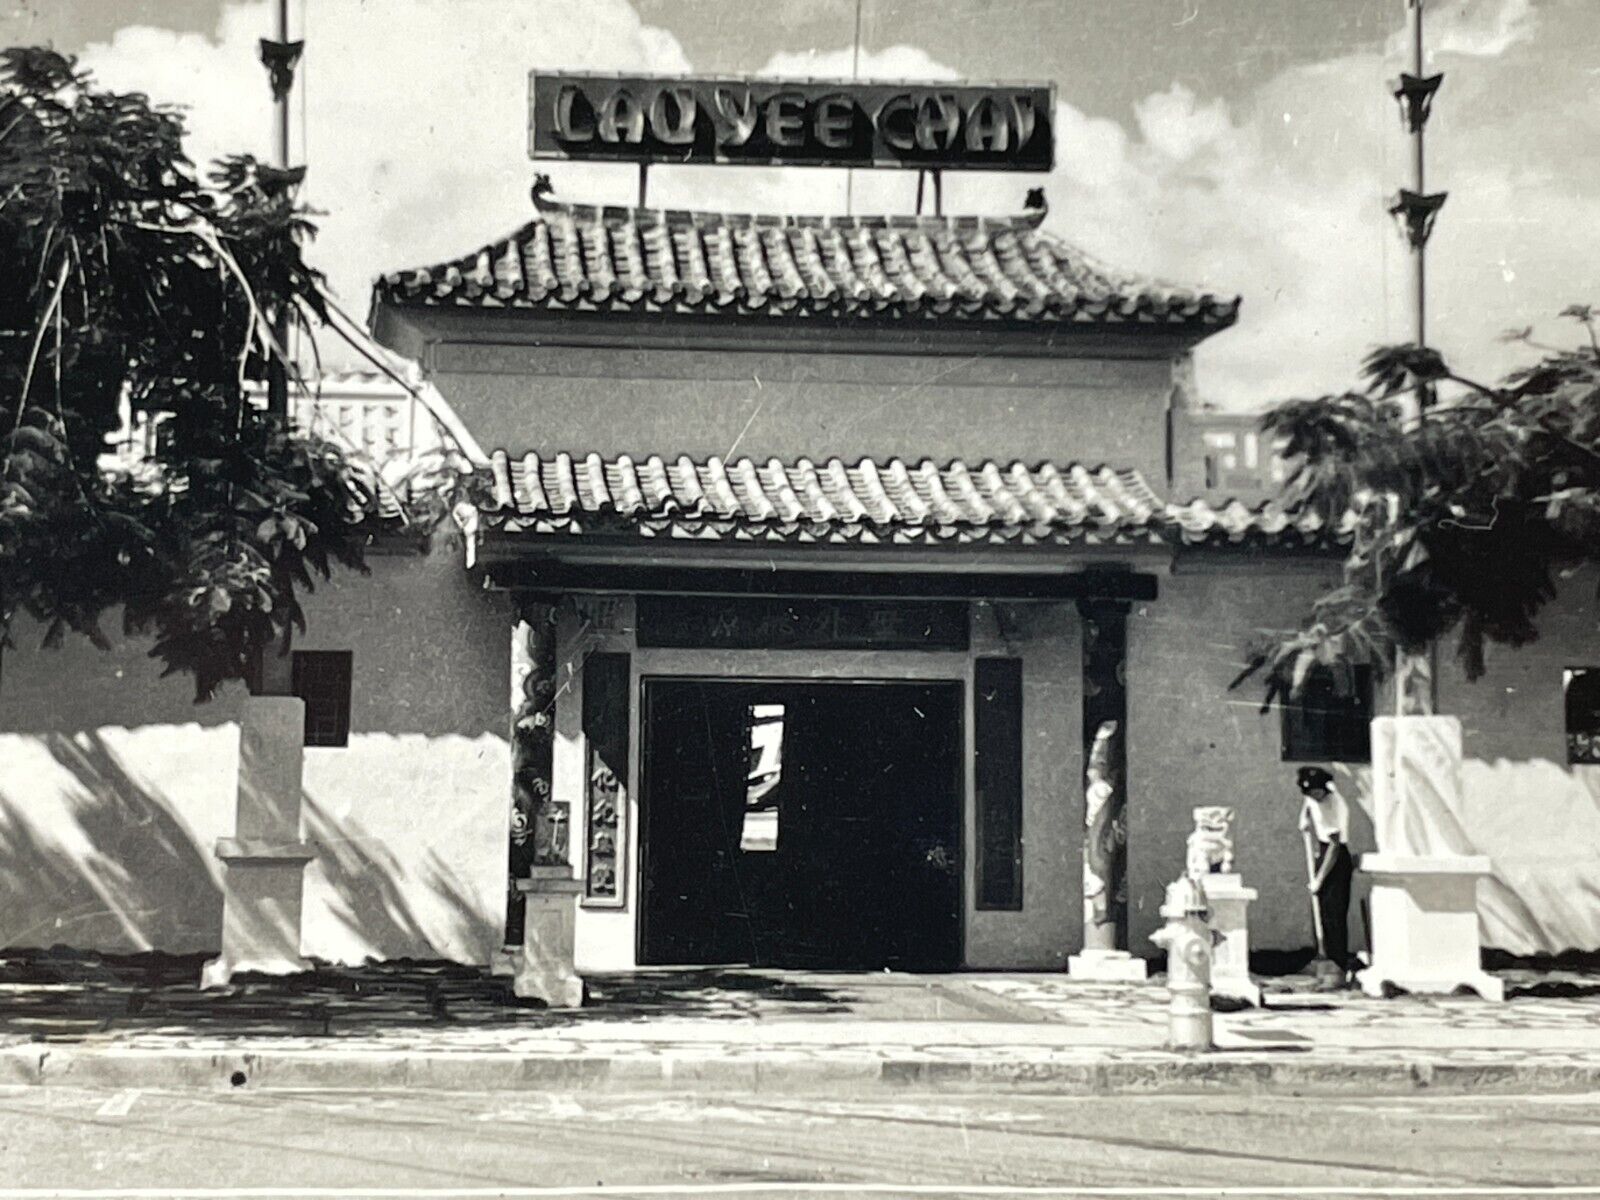 W3 Photograph House Of Abundance Lau Yee Chai Restaurant Honolulu Hawaii 1940's